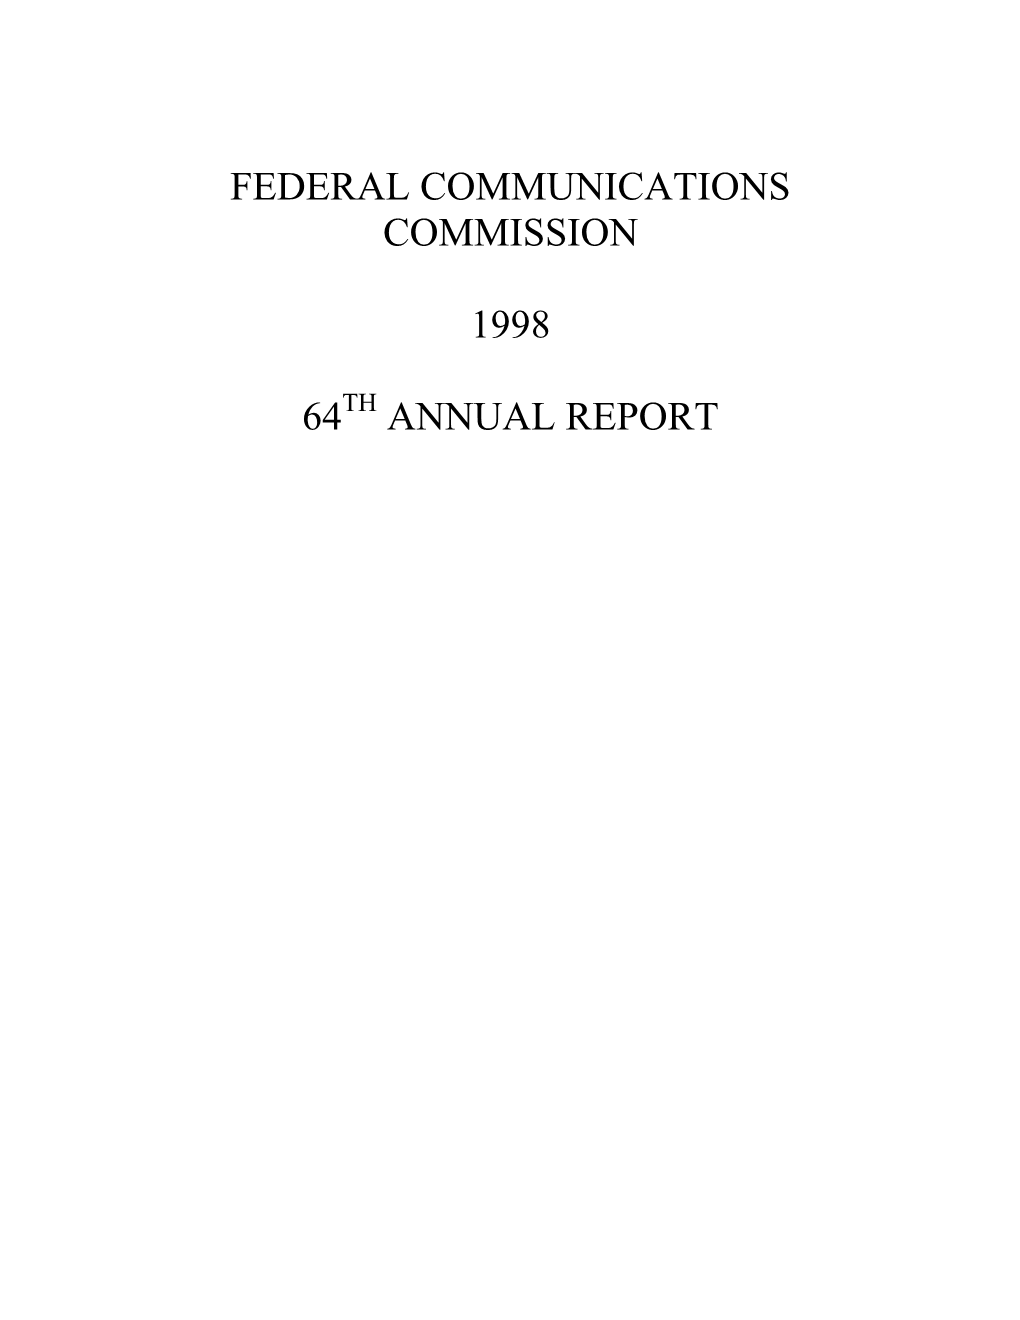 1998 FCC Annual Report